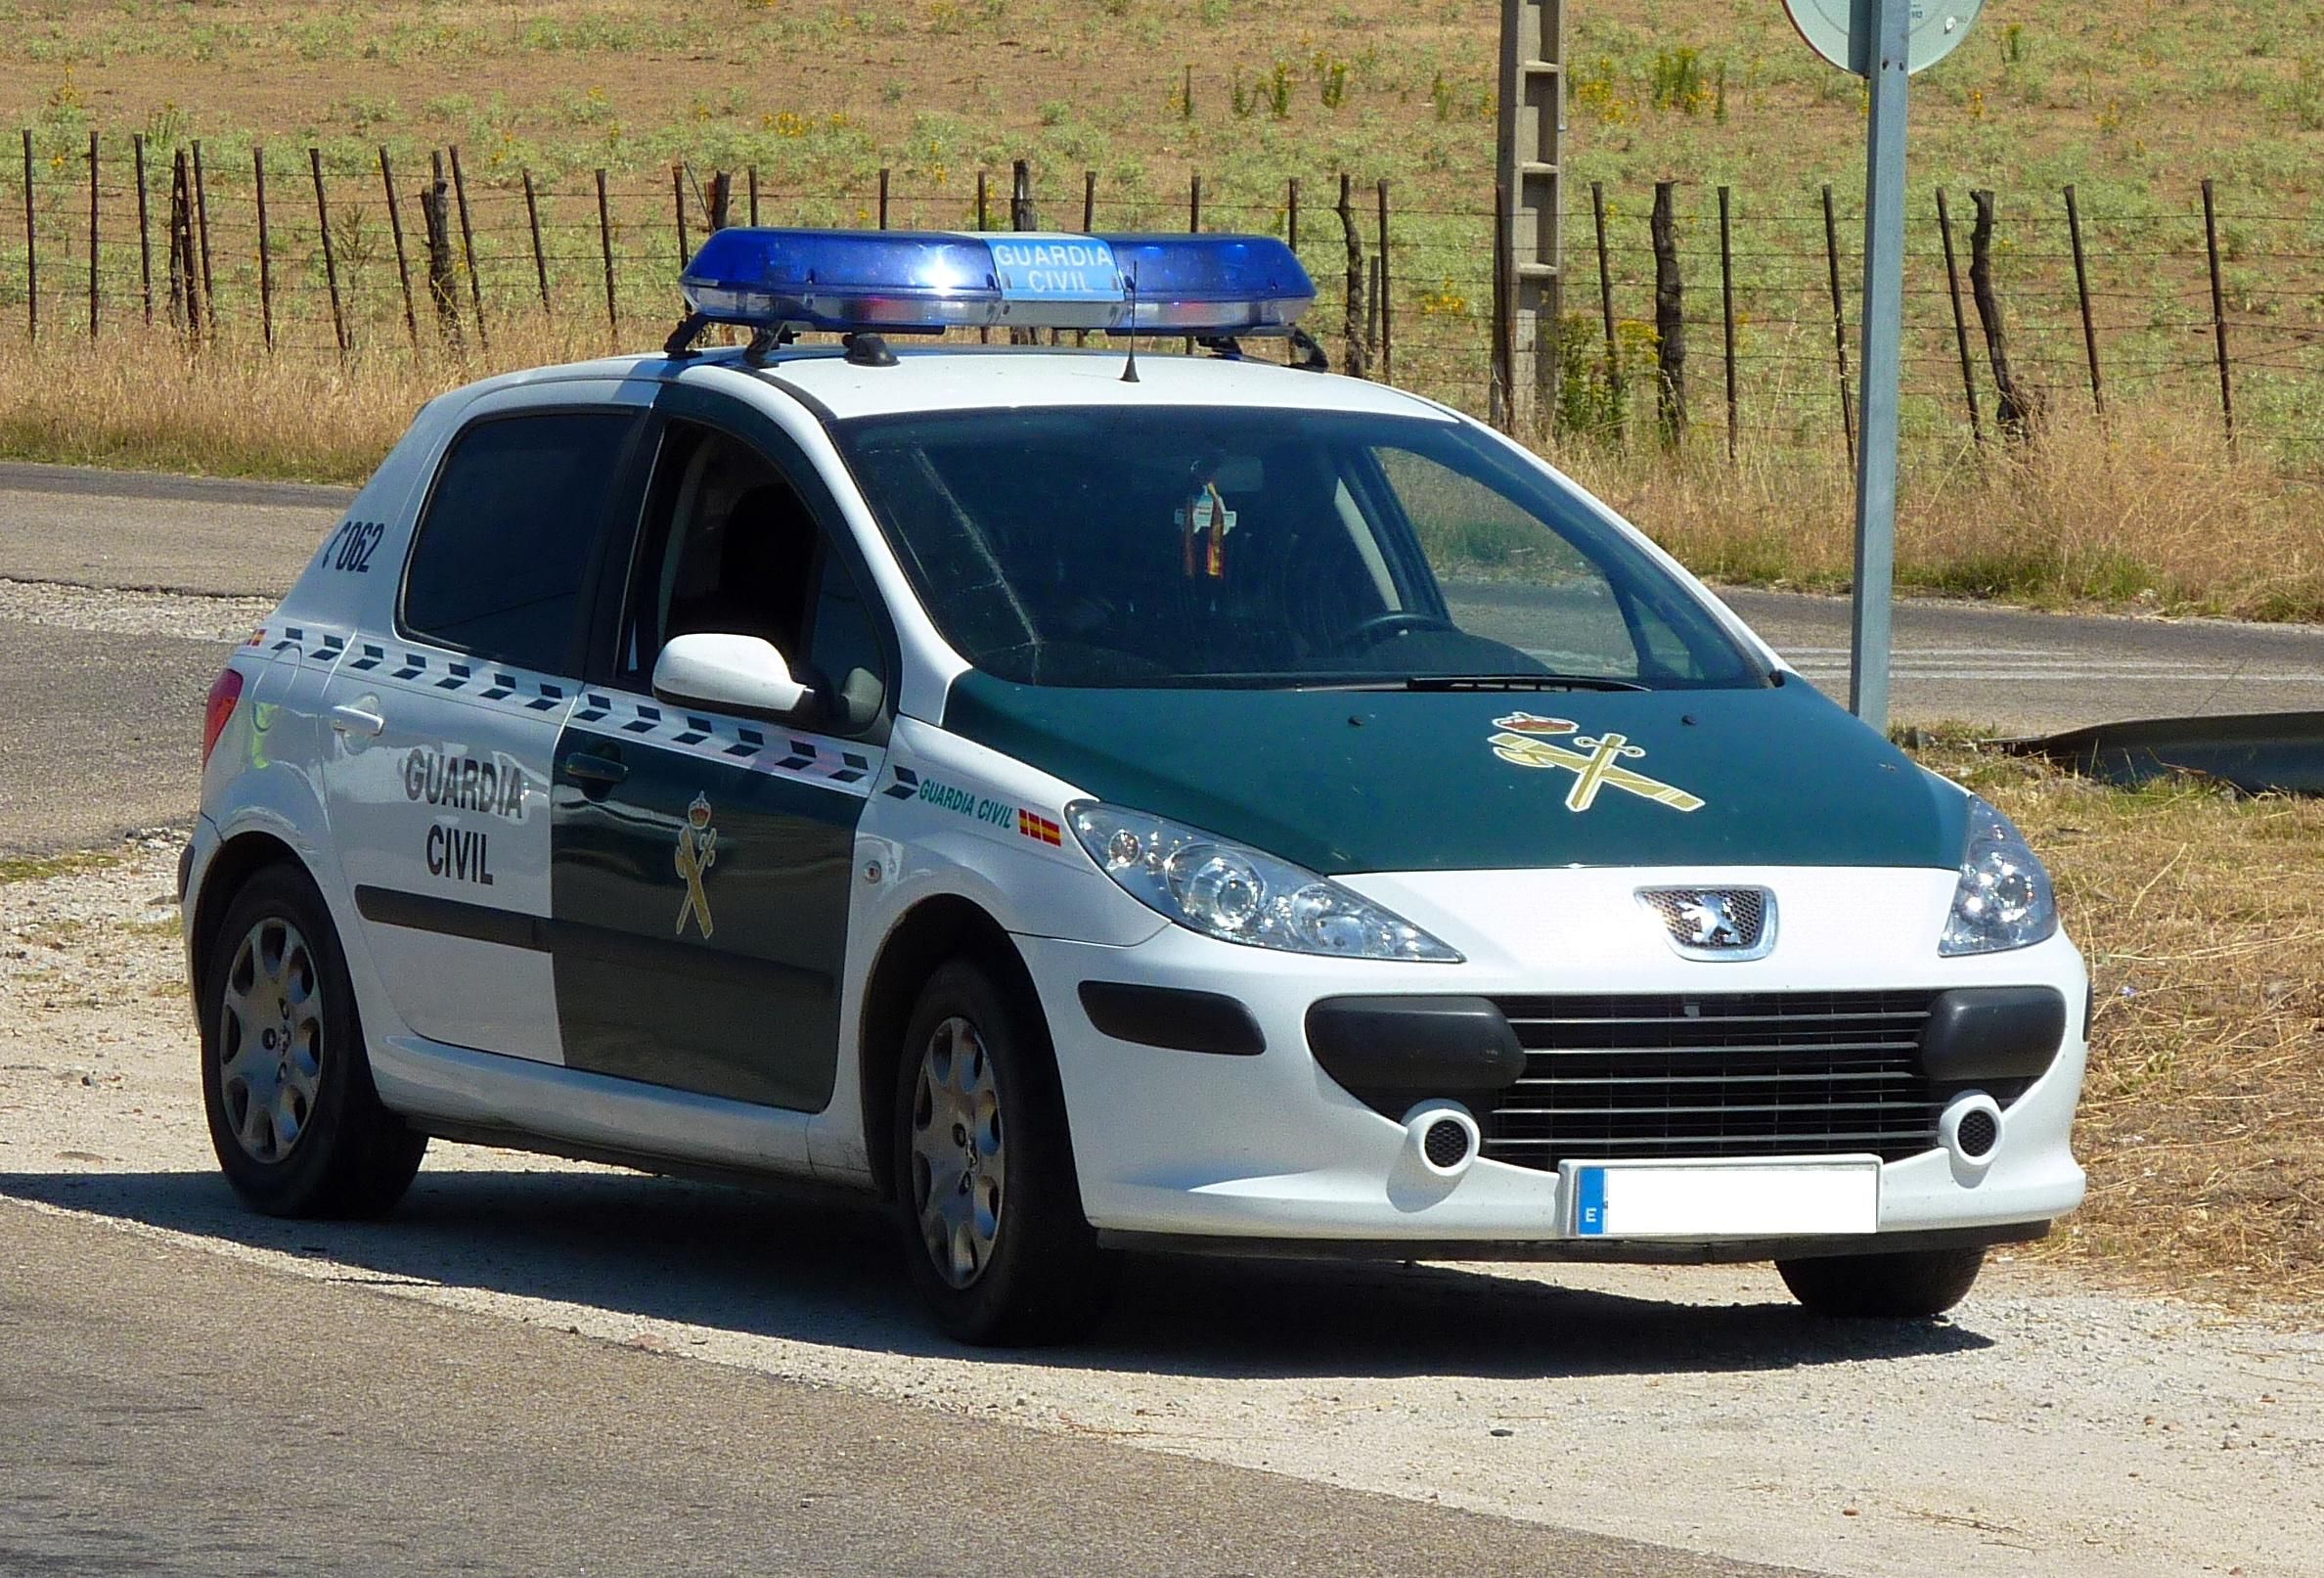 Guardia Civil / Wikimedia Commons